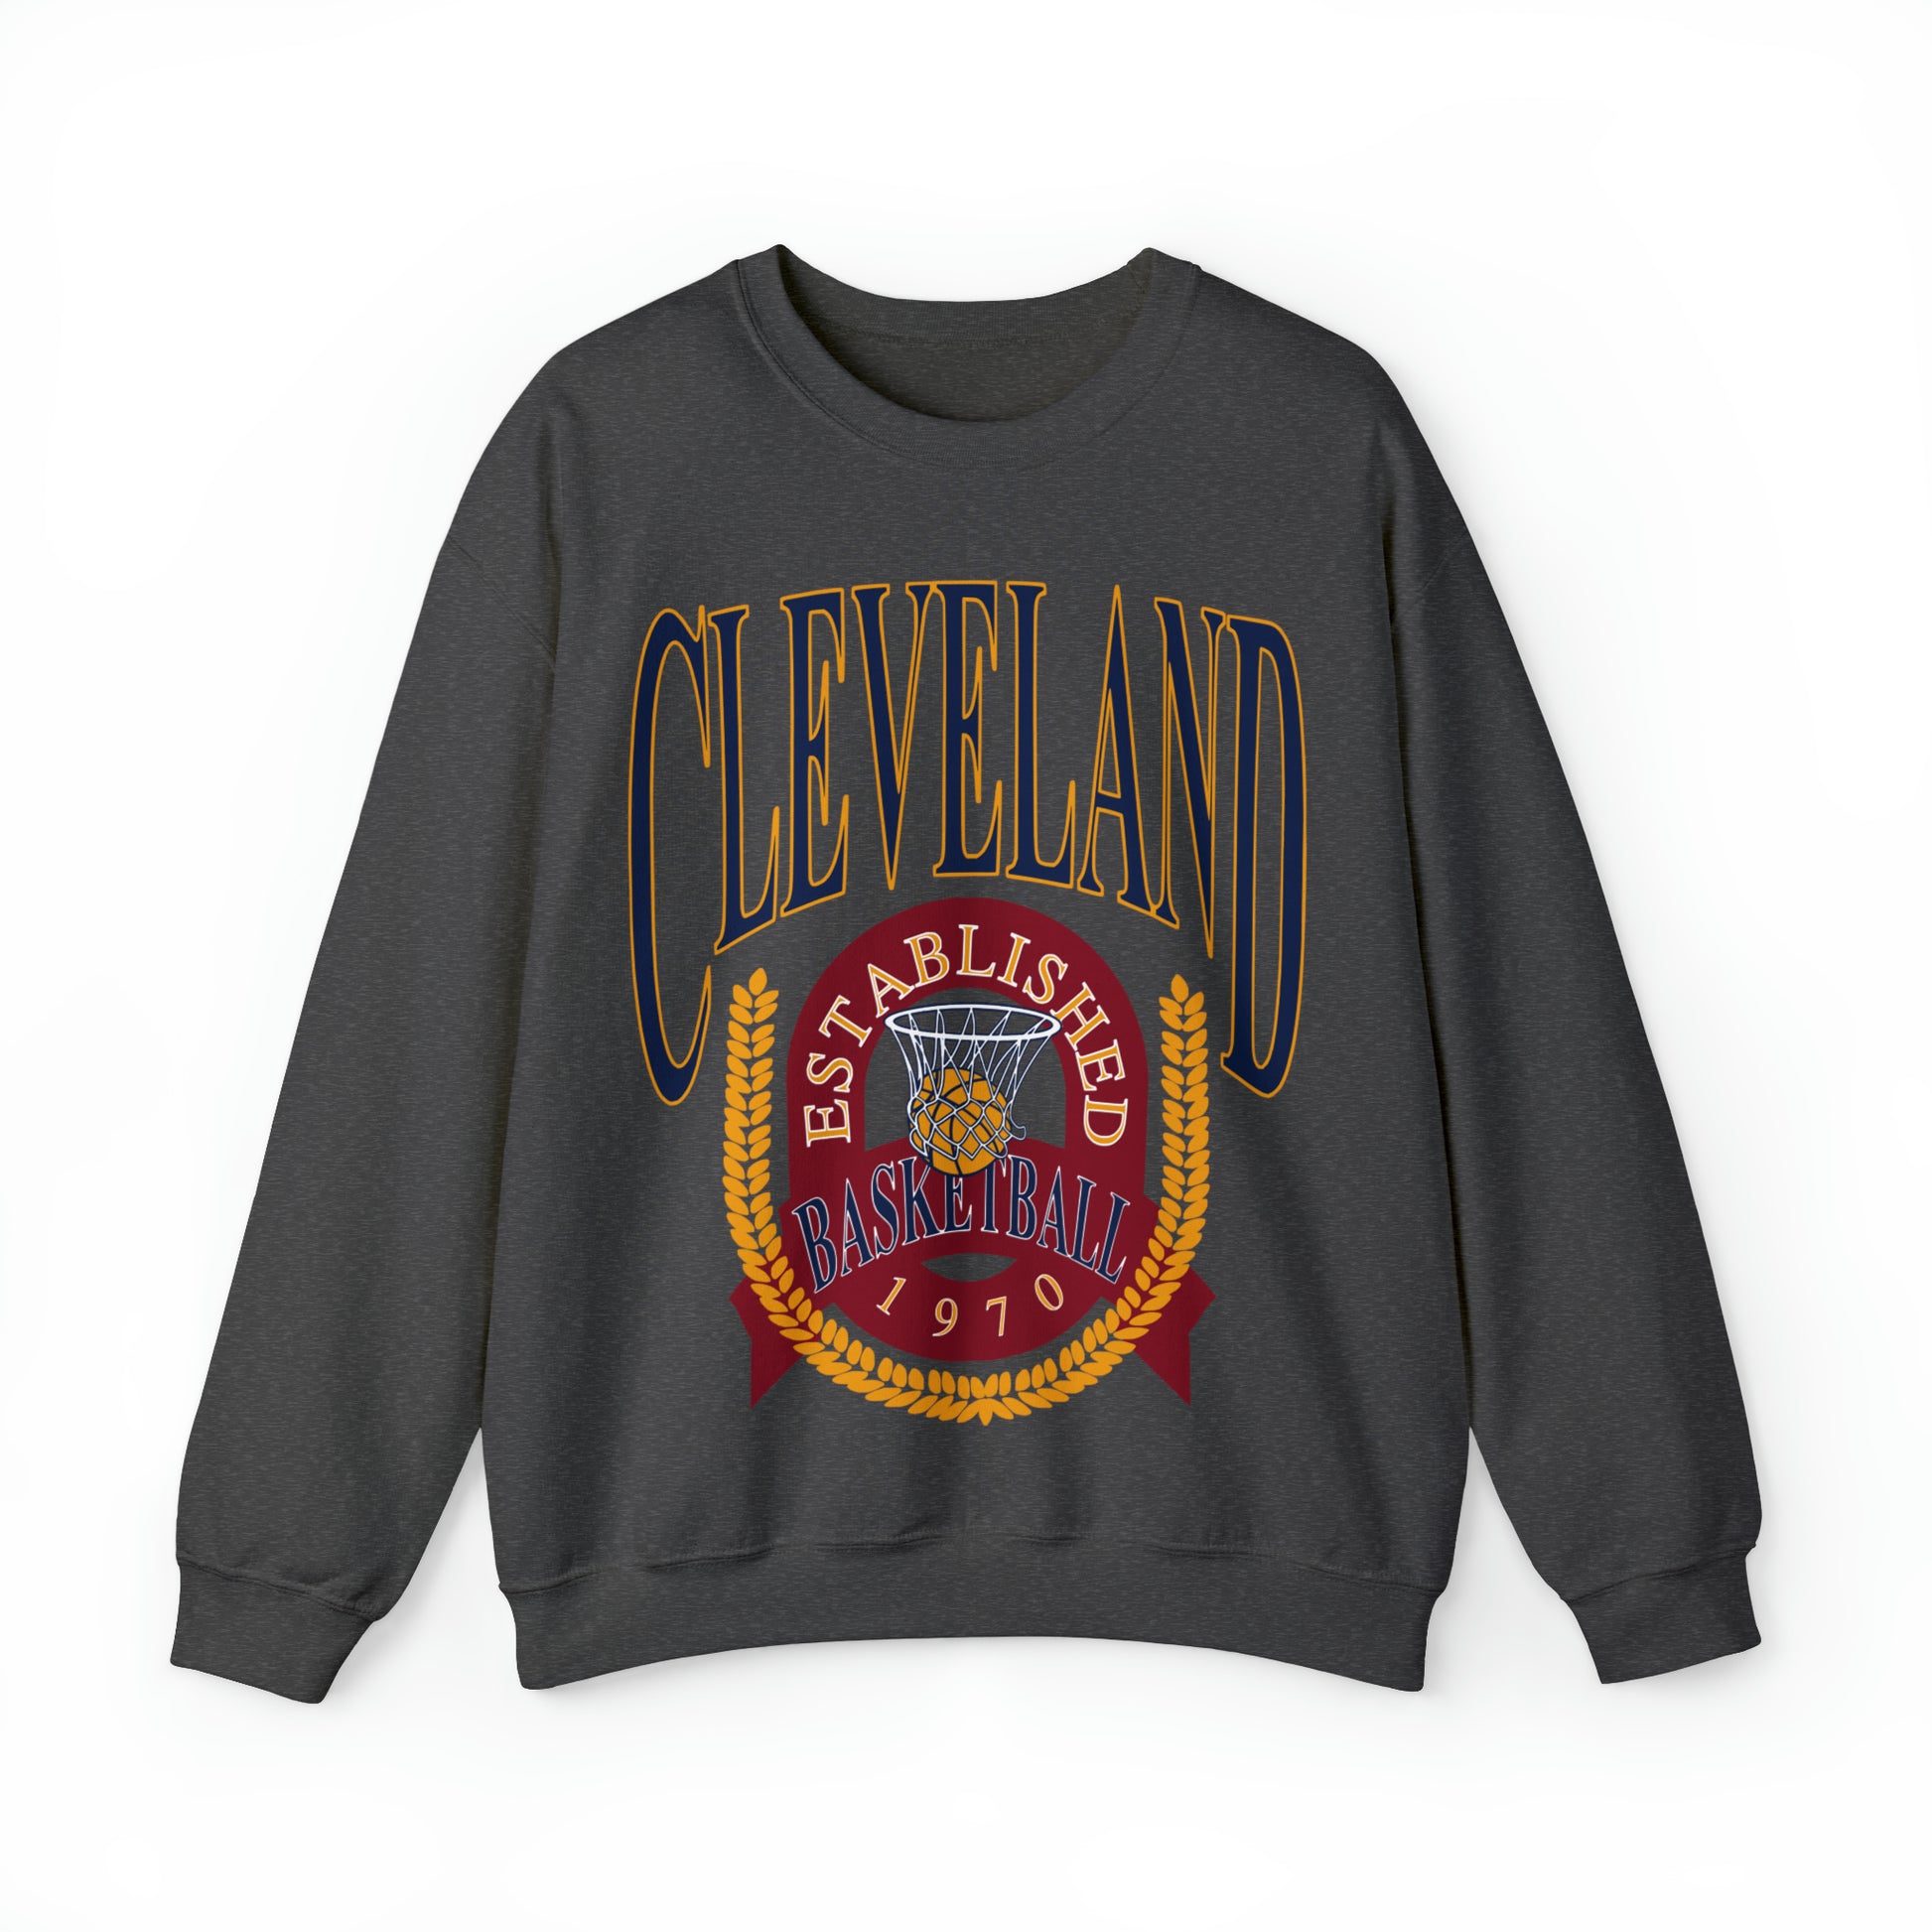 Vintage Cleveland Cavaliers Crewneck Sweatshirt Navy Blue - Retro Unisex Basketball Sweatshirt